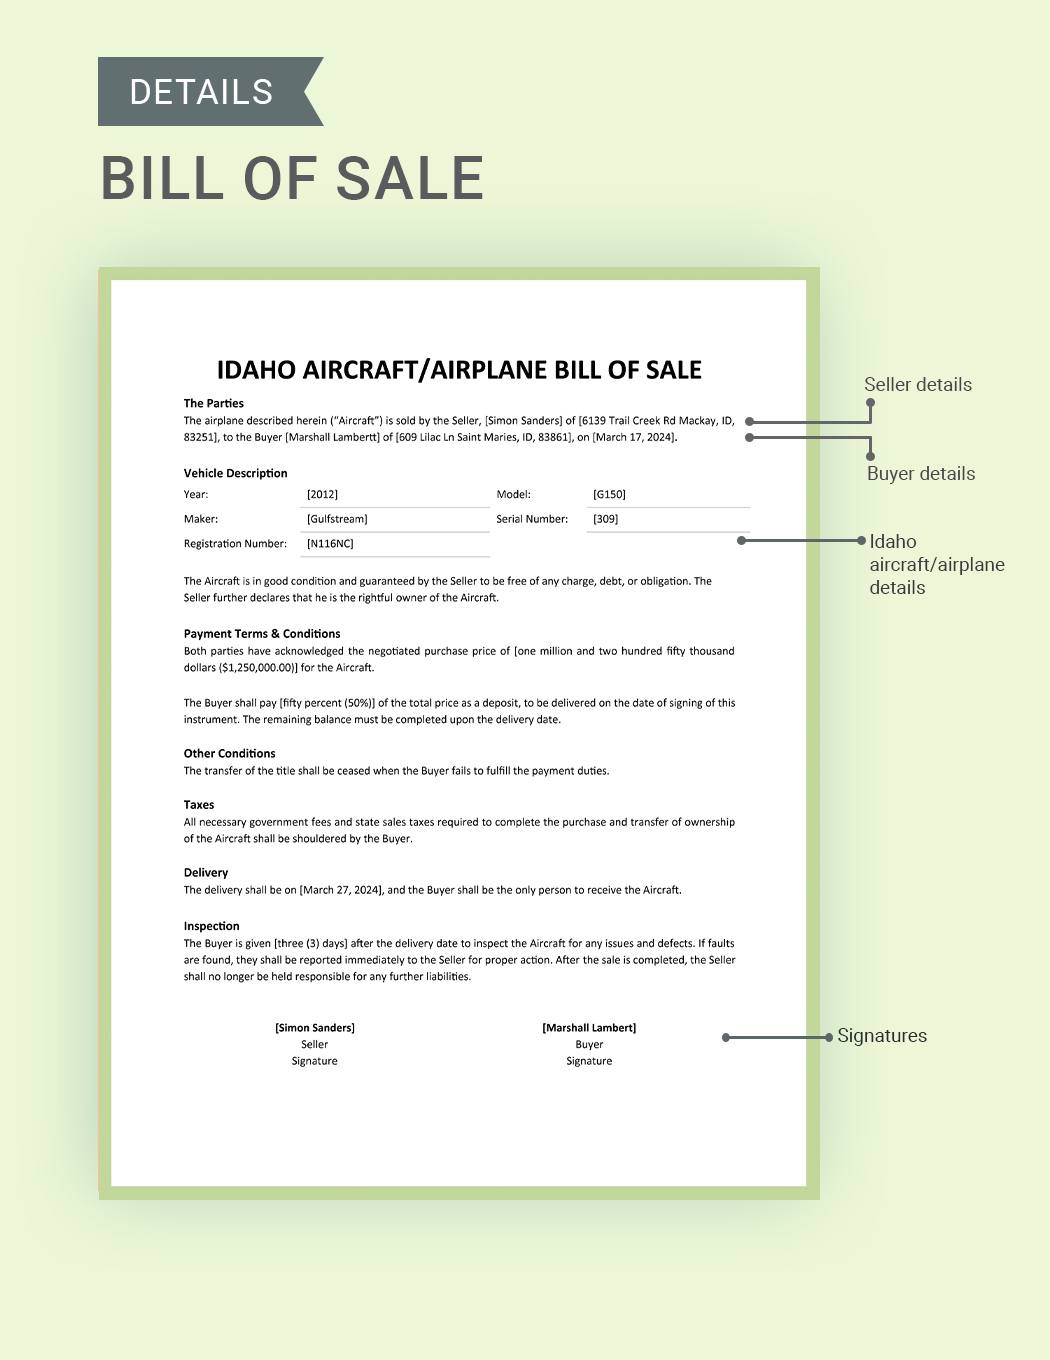 Idaho Aircraft / Airplane Bill of Sale Template